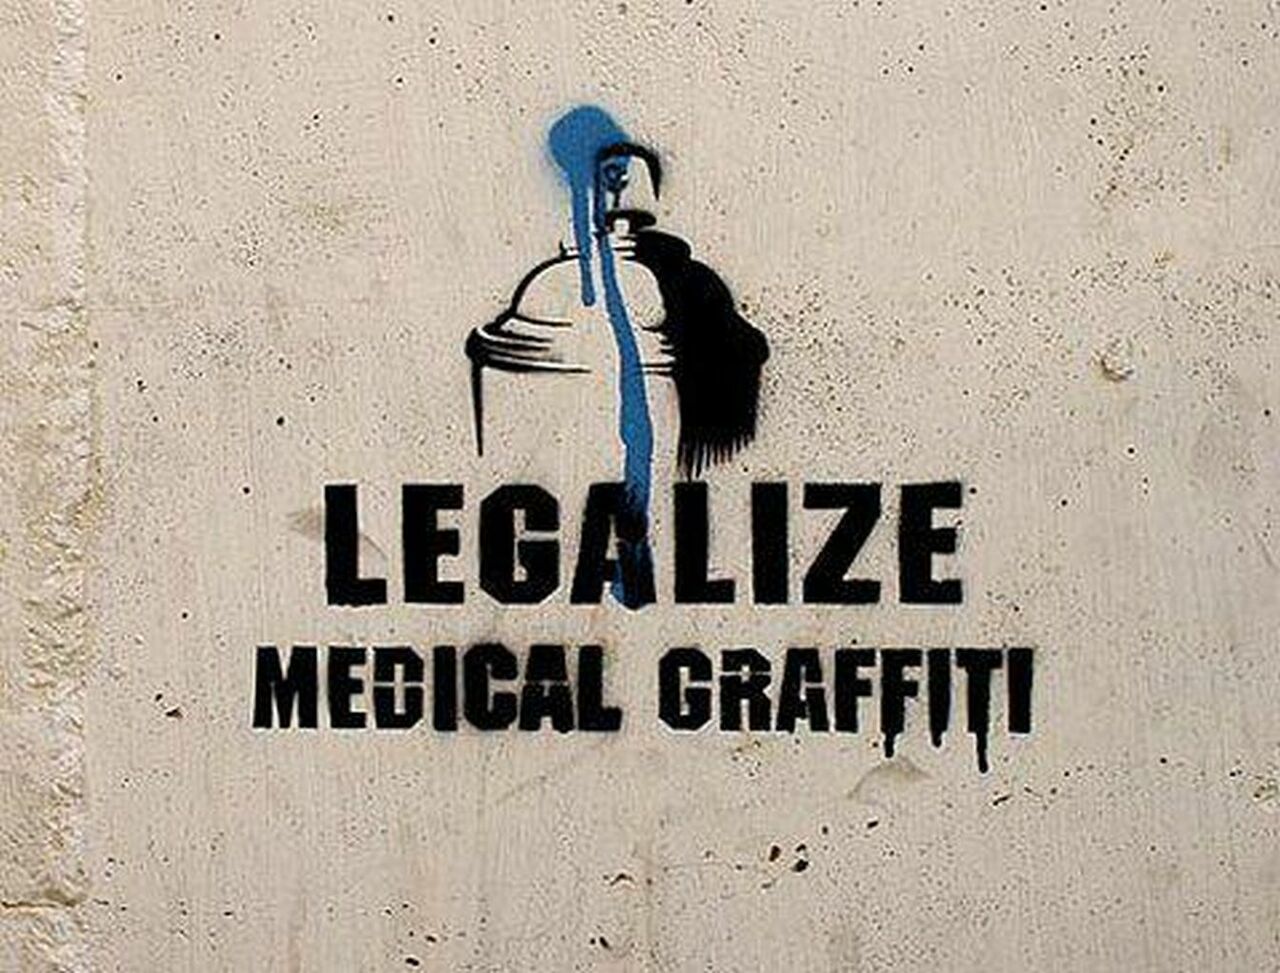 #StreetartSaturday Where #Graffiti & medical marijuana are both illegal, this #Stencil #StreetArt comments on both. https://t.co/ZZzNKZbEnY